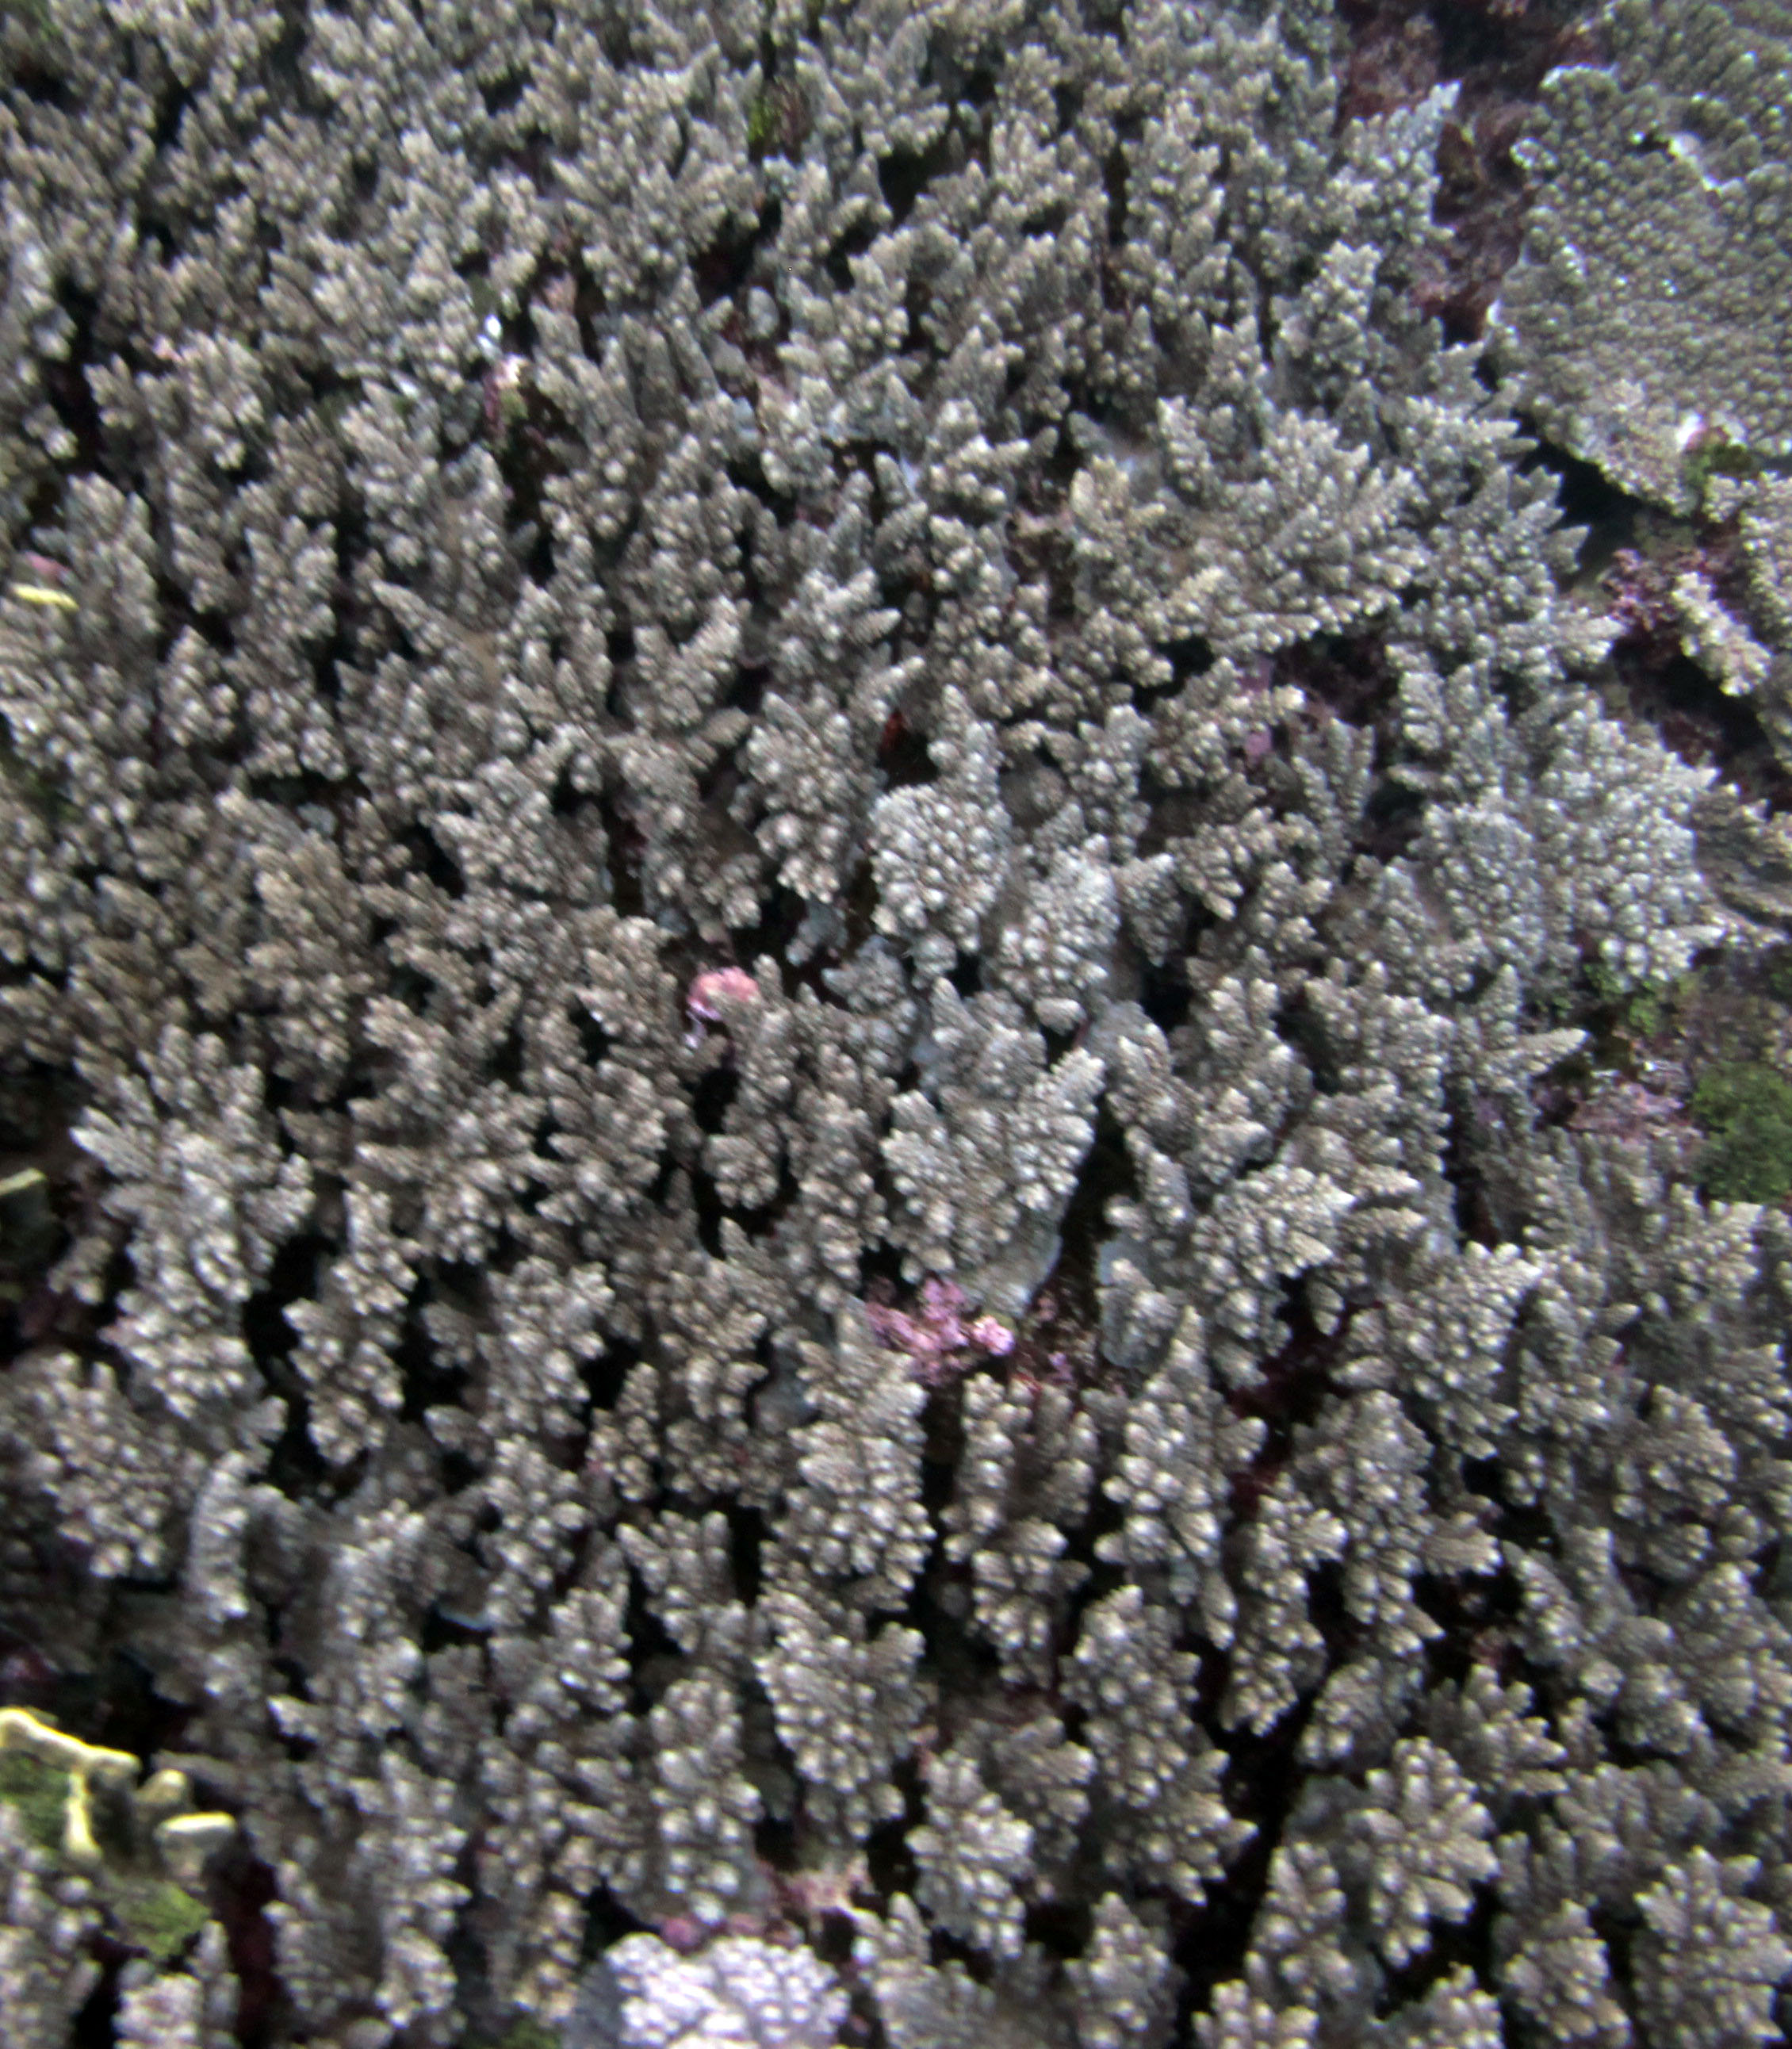 corals AUTB17 4-16-13.jpg